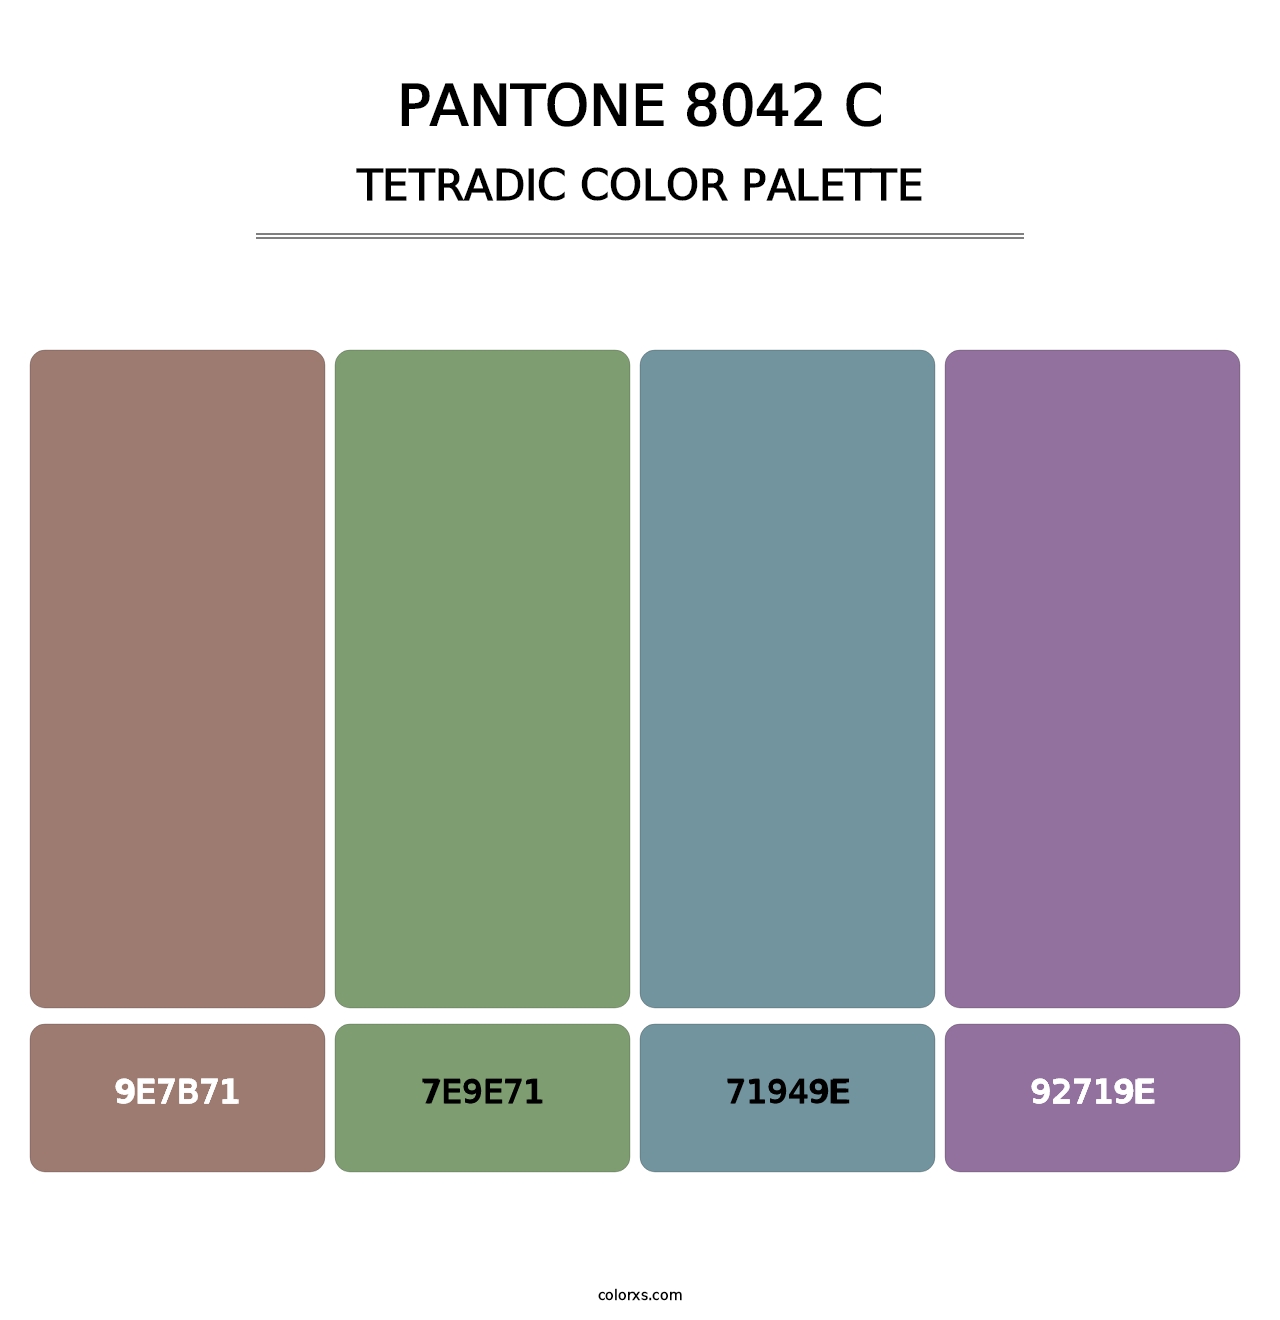 PANTONE 8042 C - Tetradic Color Palette